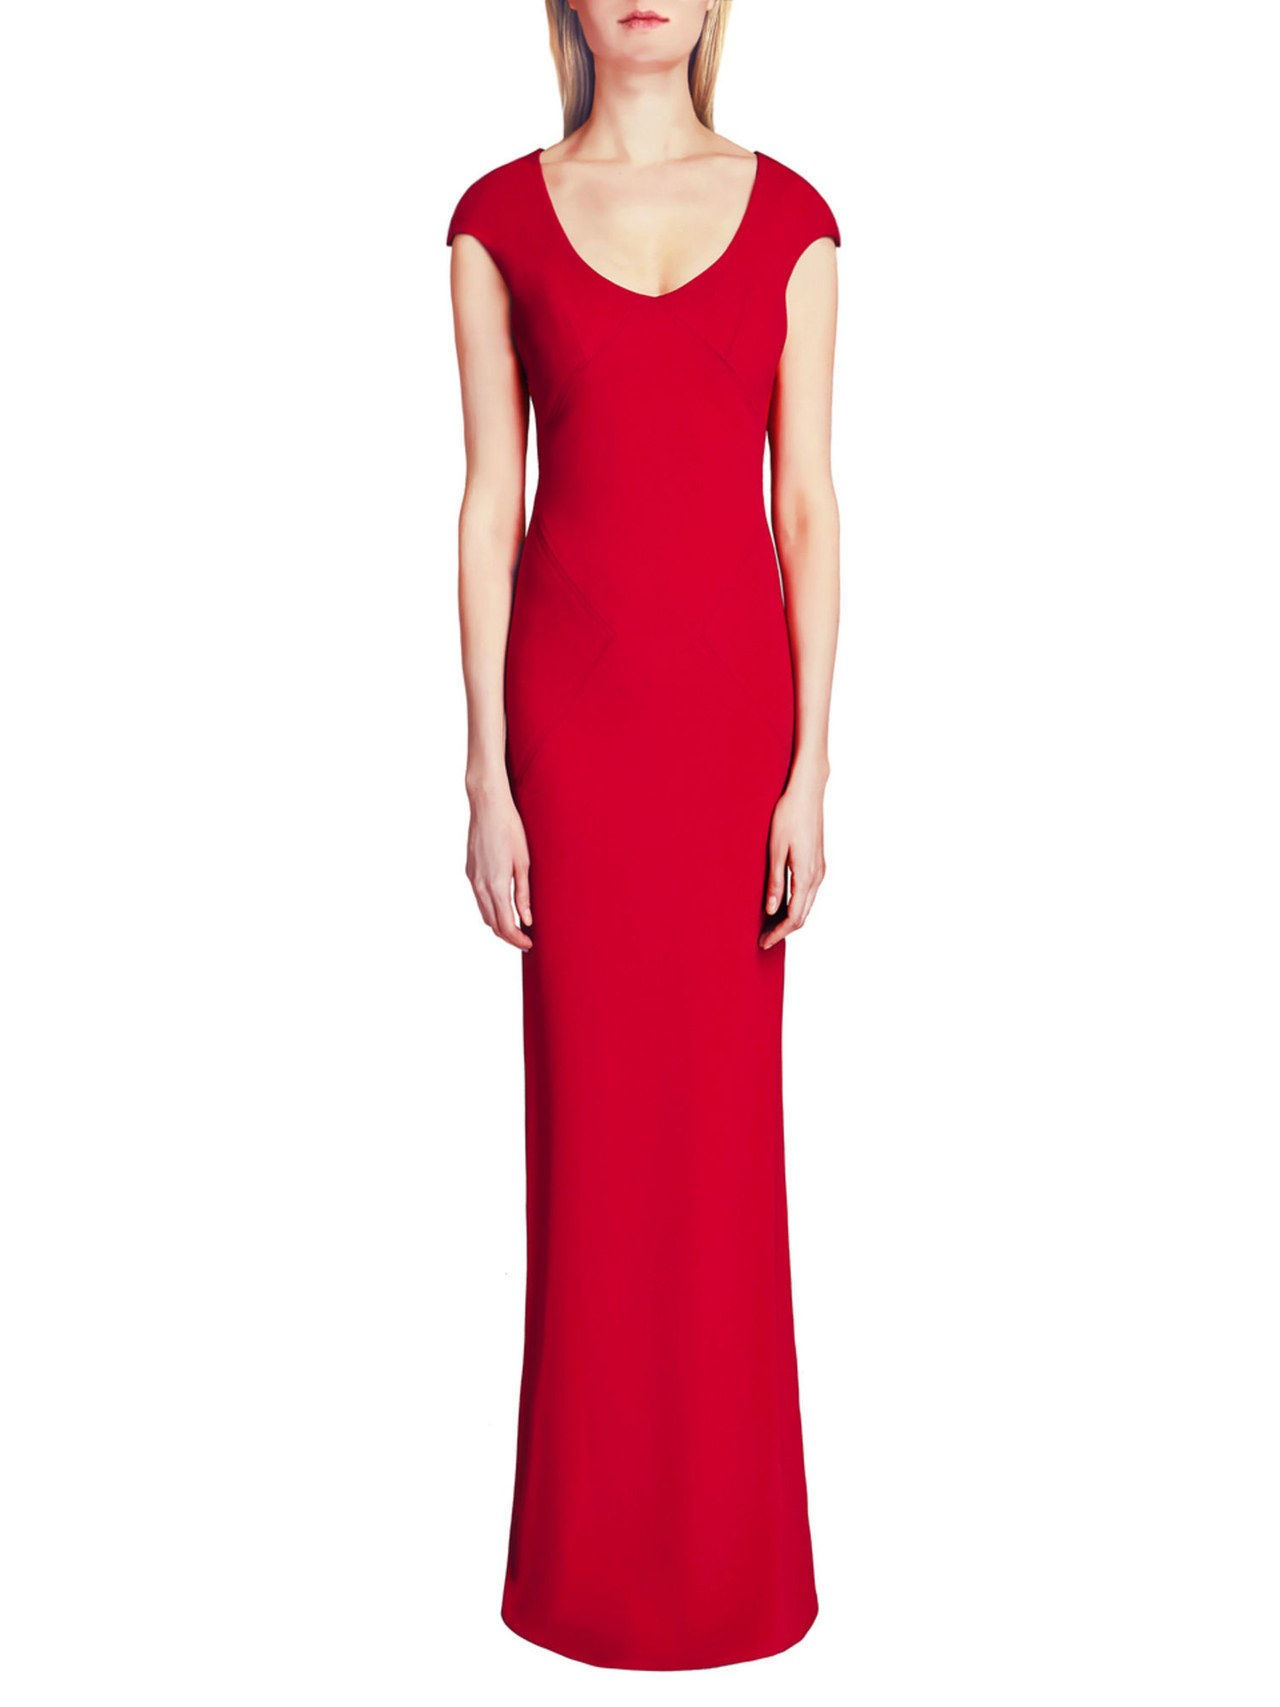 سونيا morgan red evening gown